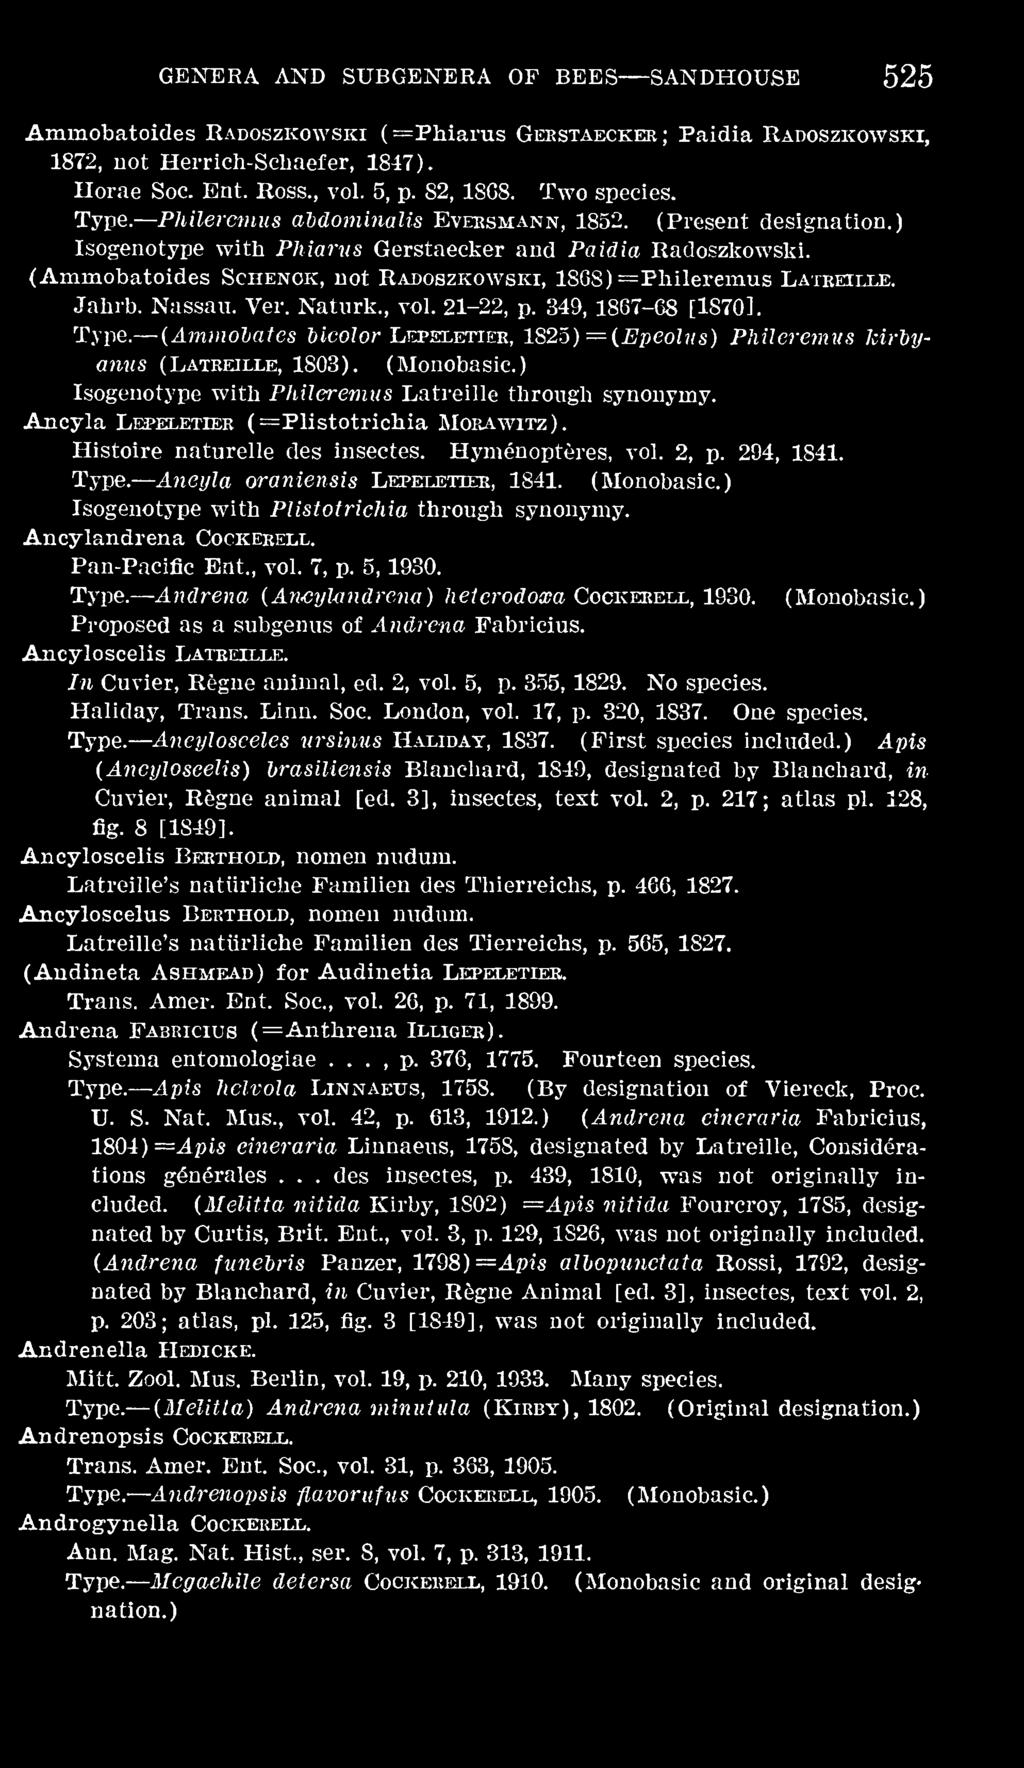 eteee, 1841. (Monobasic.) Isogenotype with Plistotrichia through synonymy. Ancylandrena Cockeeell. Pan-Pacific Ent., vol. 7, p. 5, 1930. Andrena (Ancylandrena) 7ie^ero(?oa?a Cockerell, 1930.